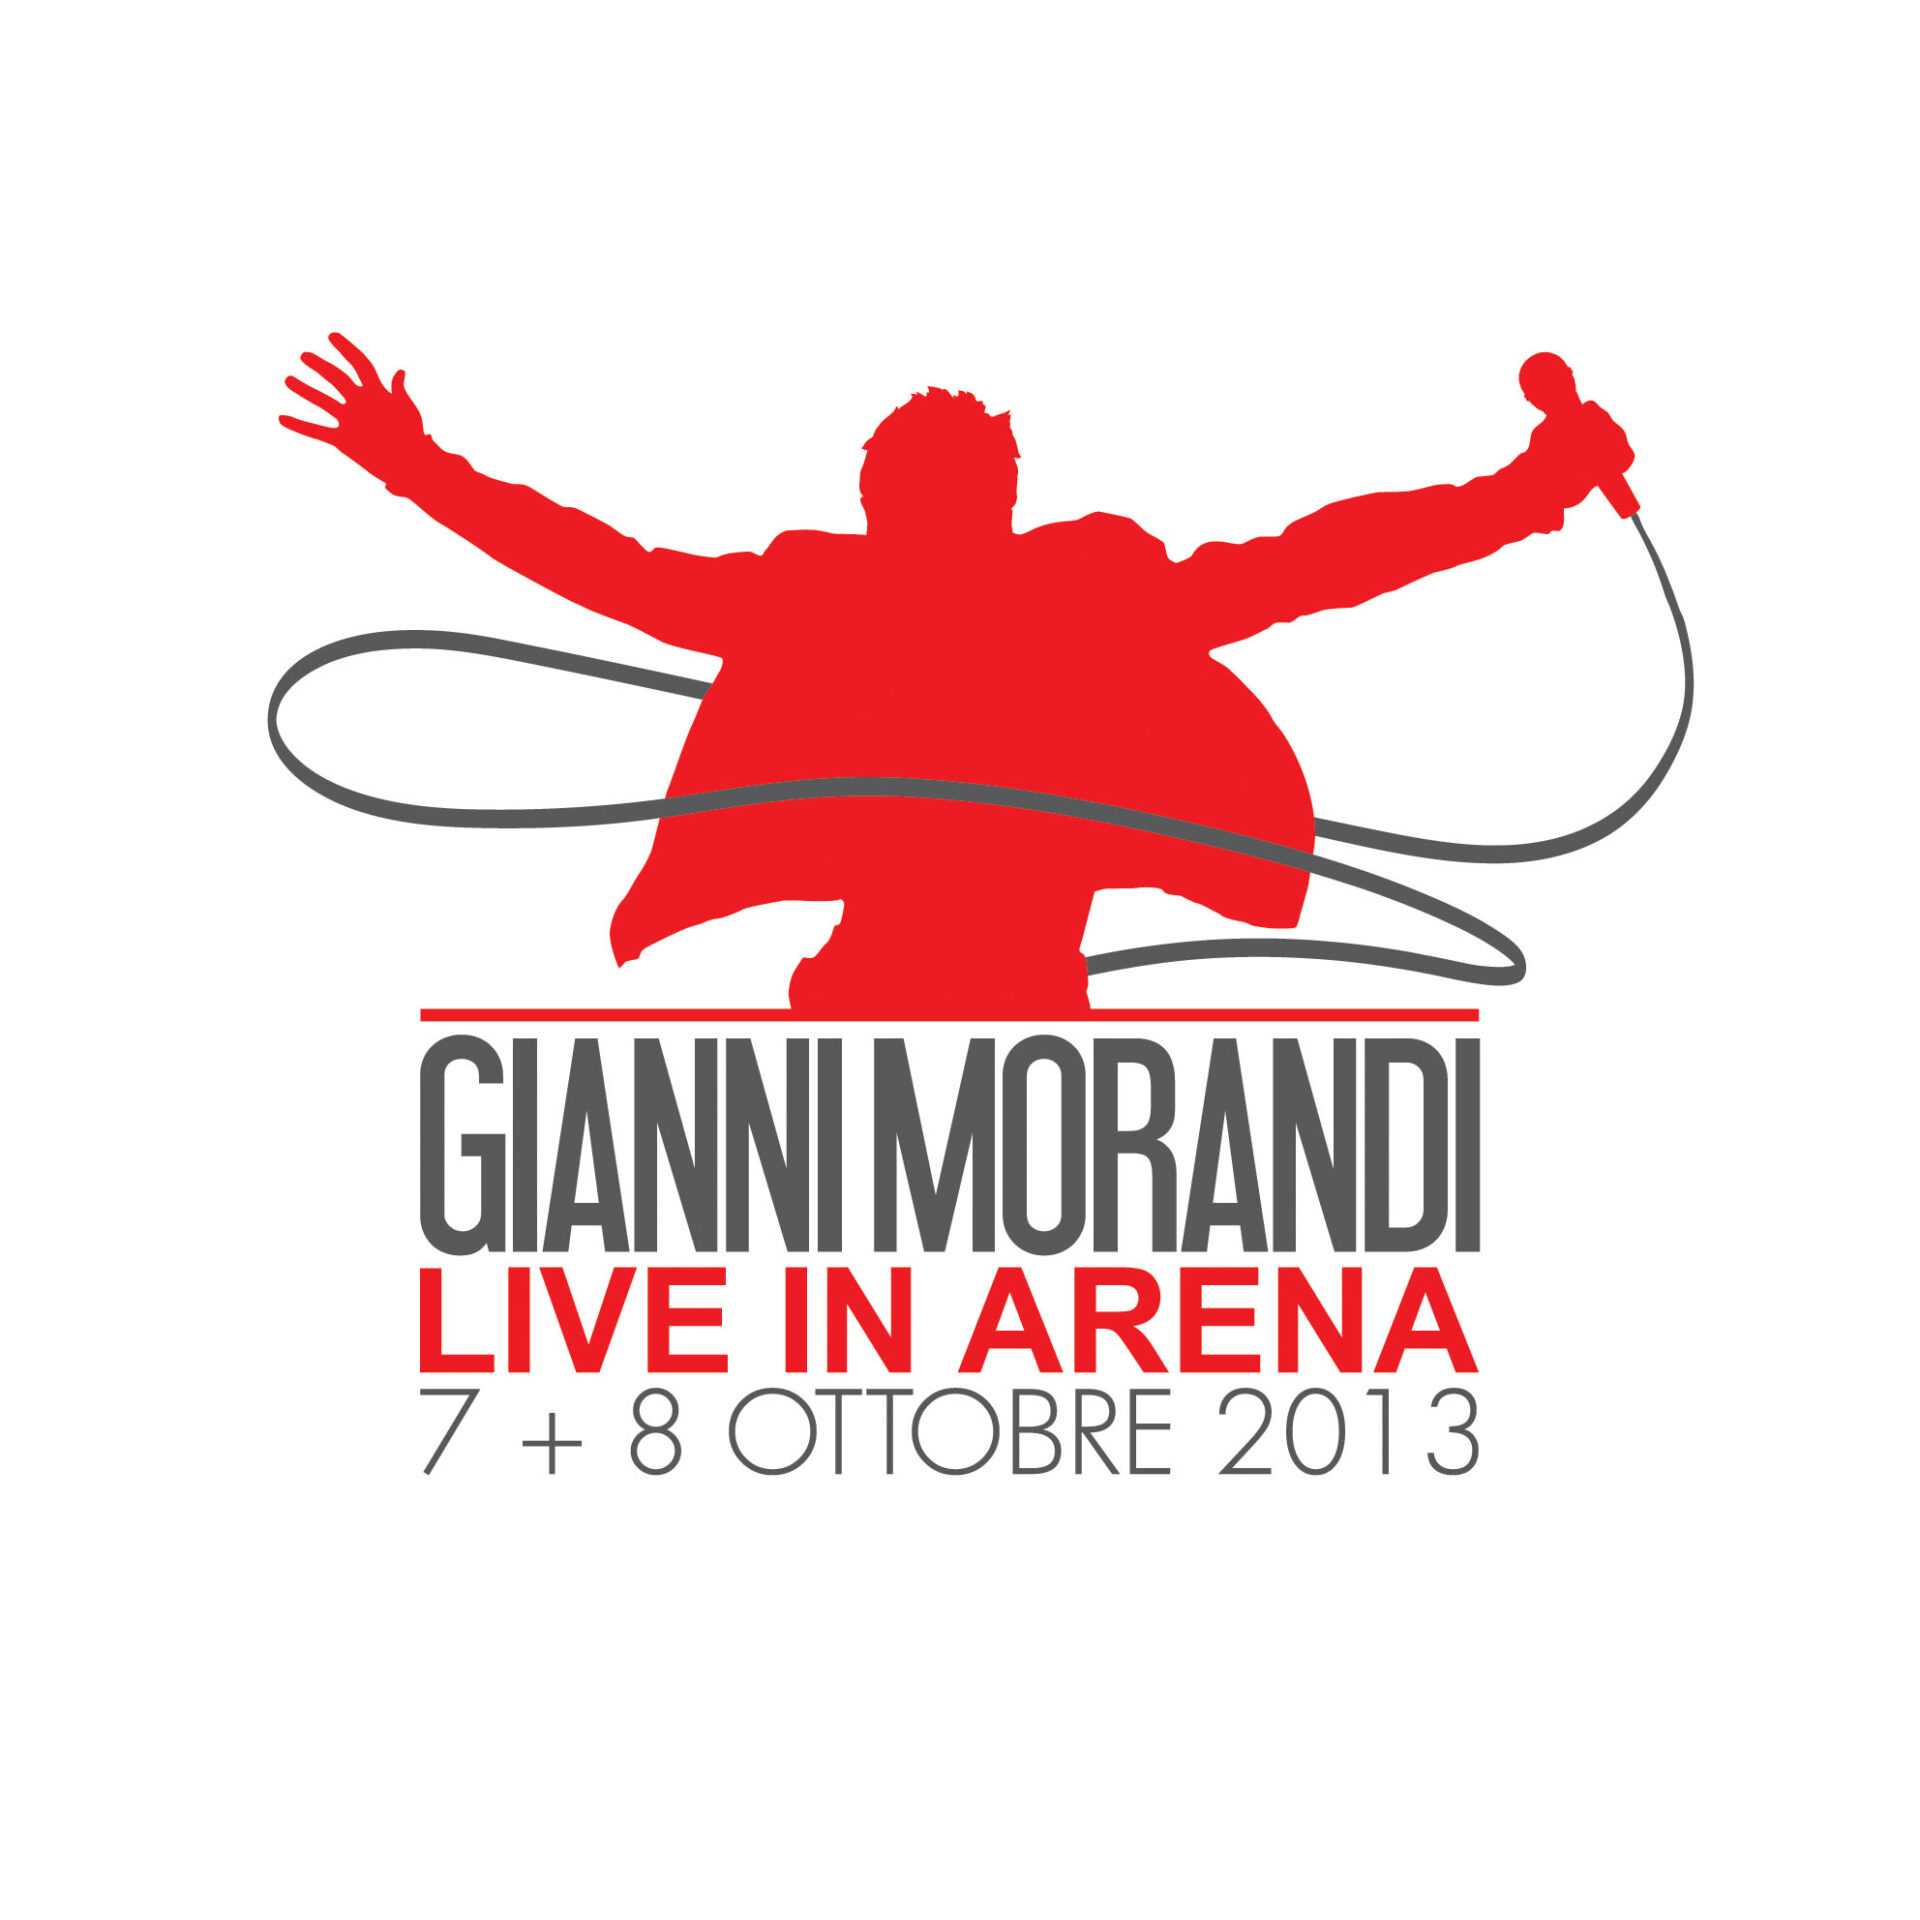 Gianni Morandi live in Arena, due serate su Canale5 | Digitale terrestre: Dtti.it